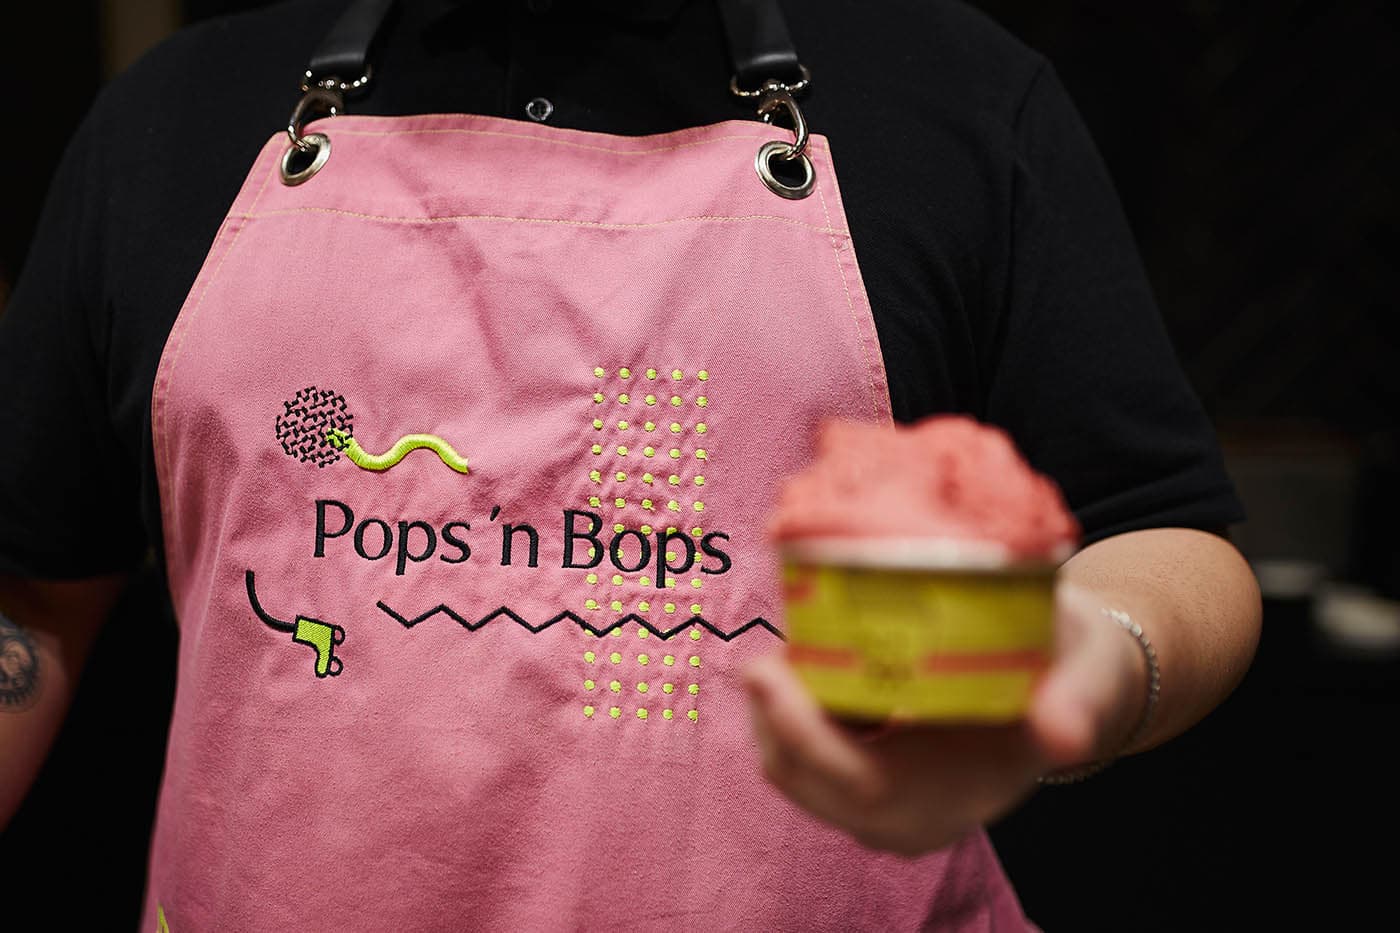 Diseño de branding y packaging para Heladería Pops ‘n Bops